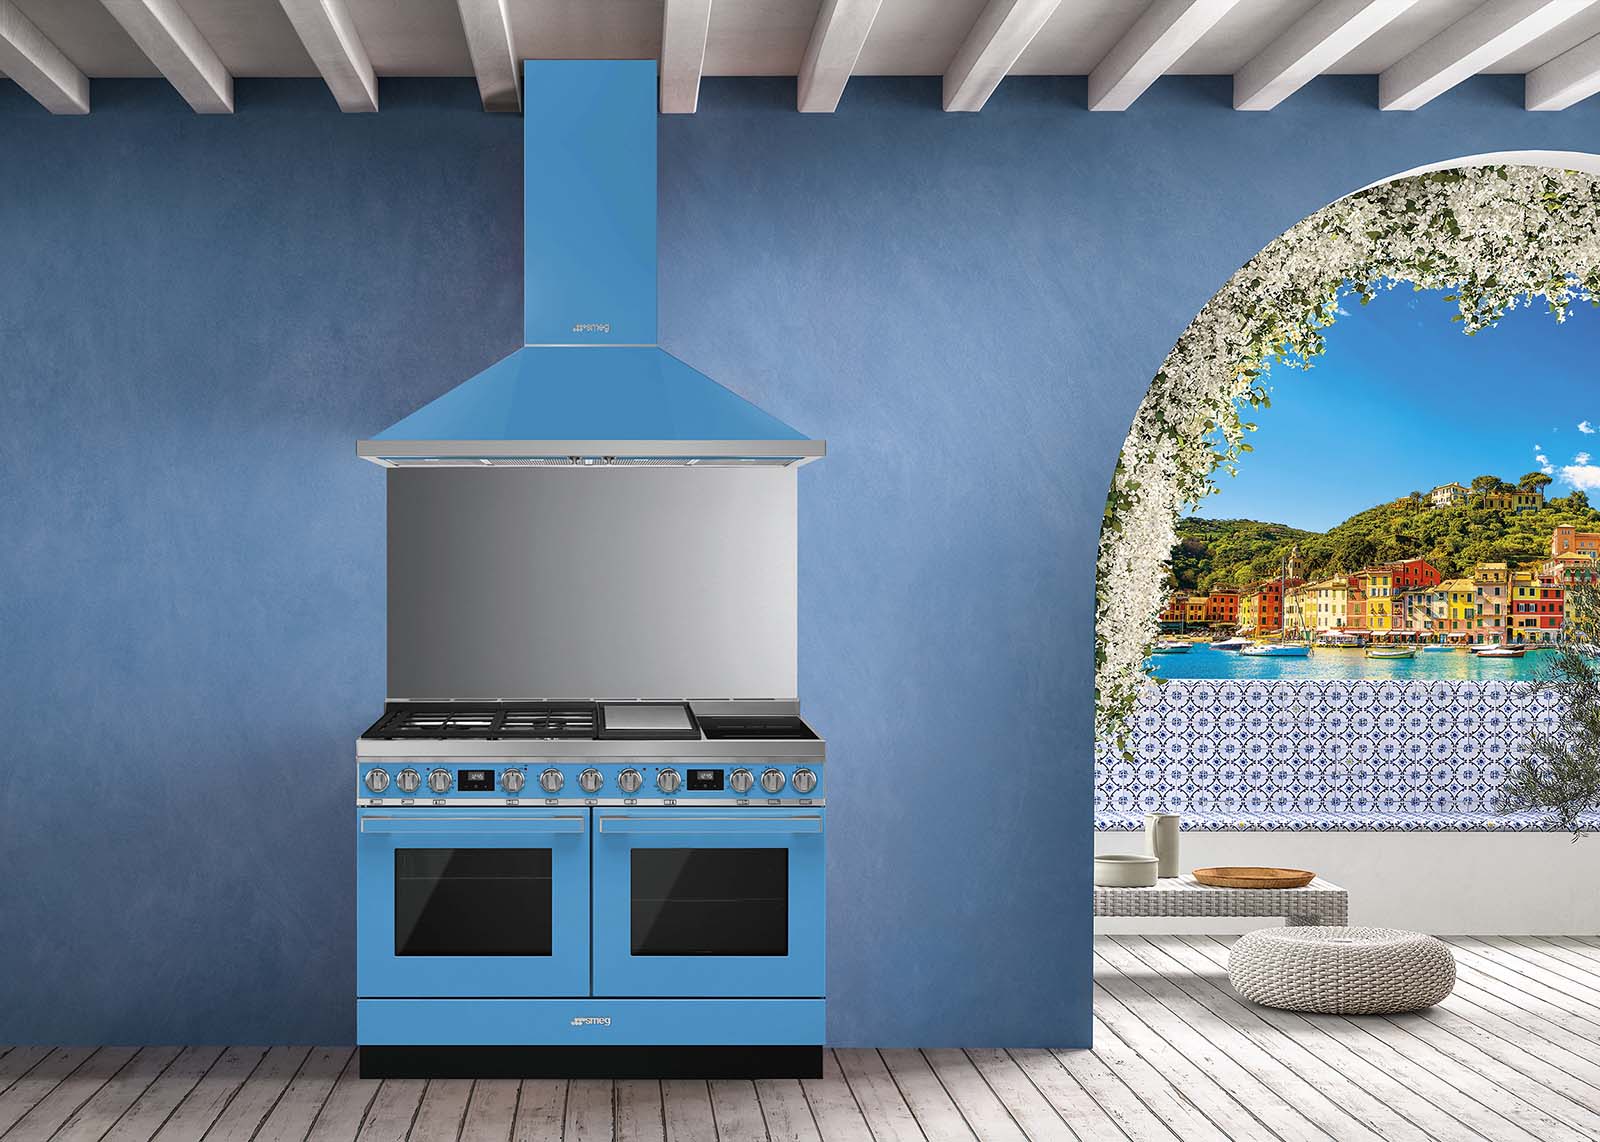 Smeg launches a new range of Italian inspired kitchen appliances - KRIEDER